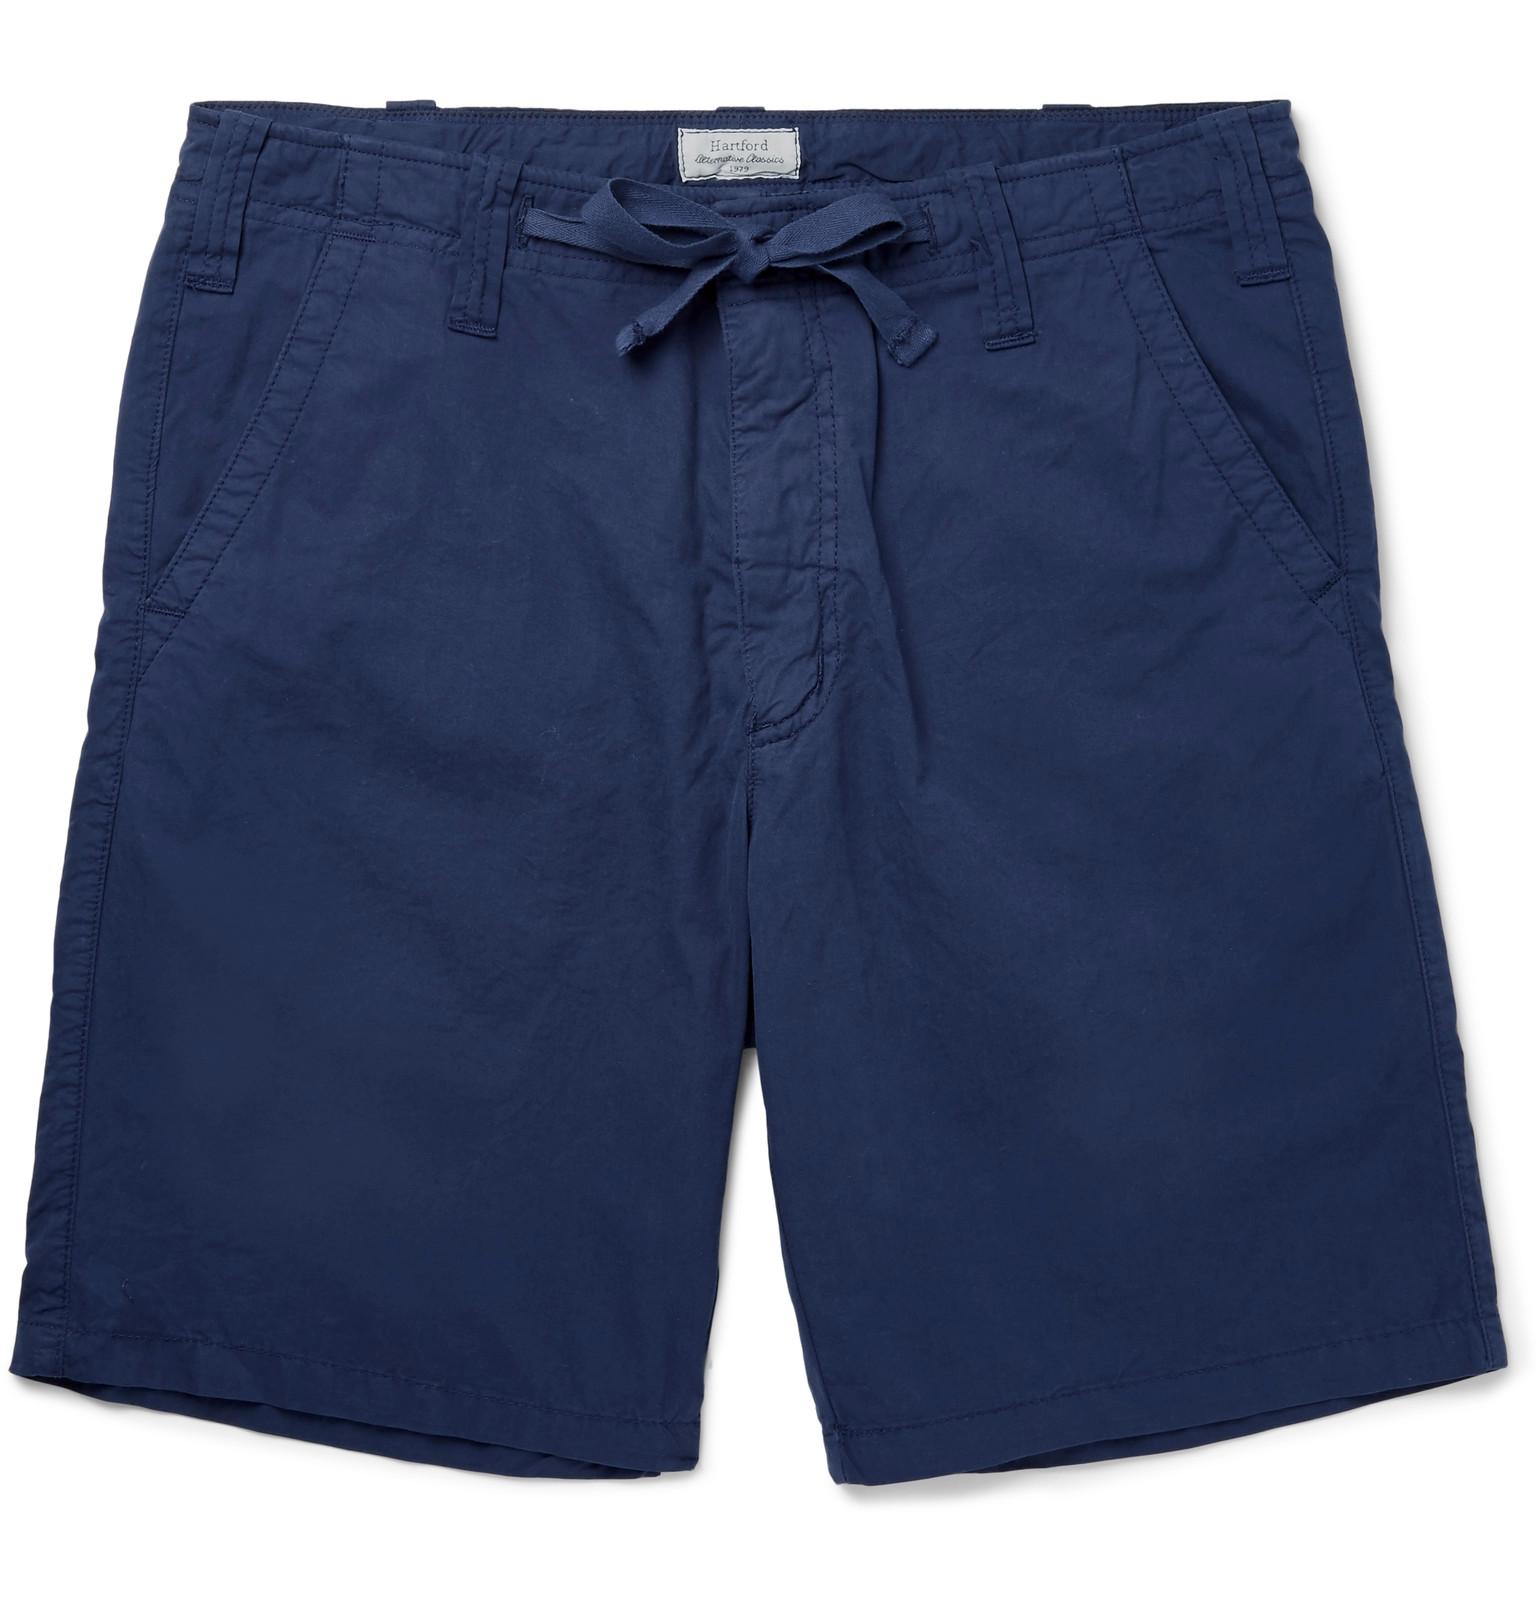 Lyst - Hartford Slim-fit Cotton Drawstring Shorts in Blue for Men